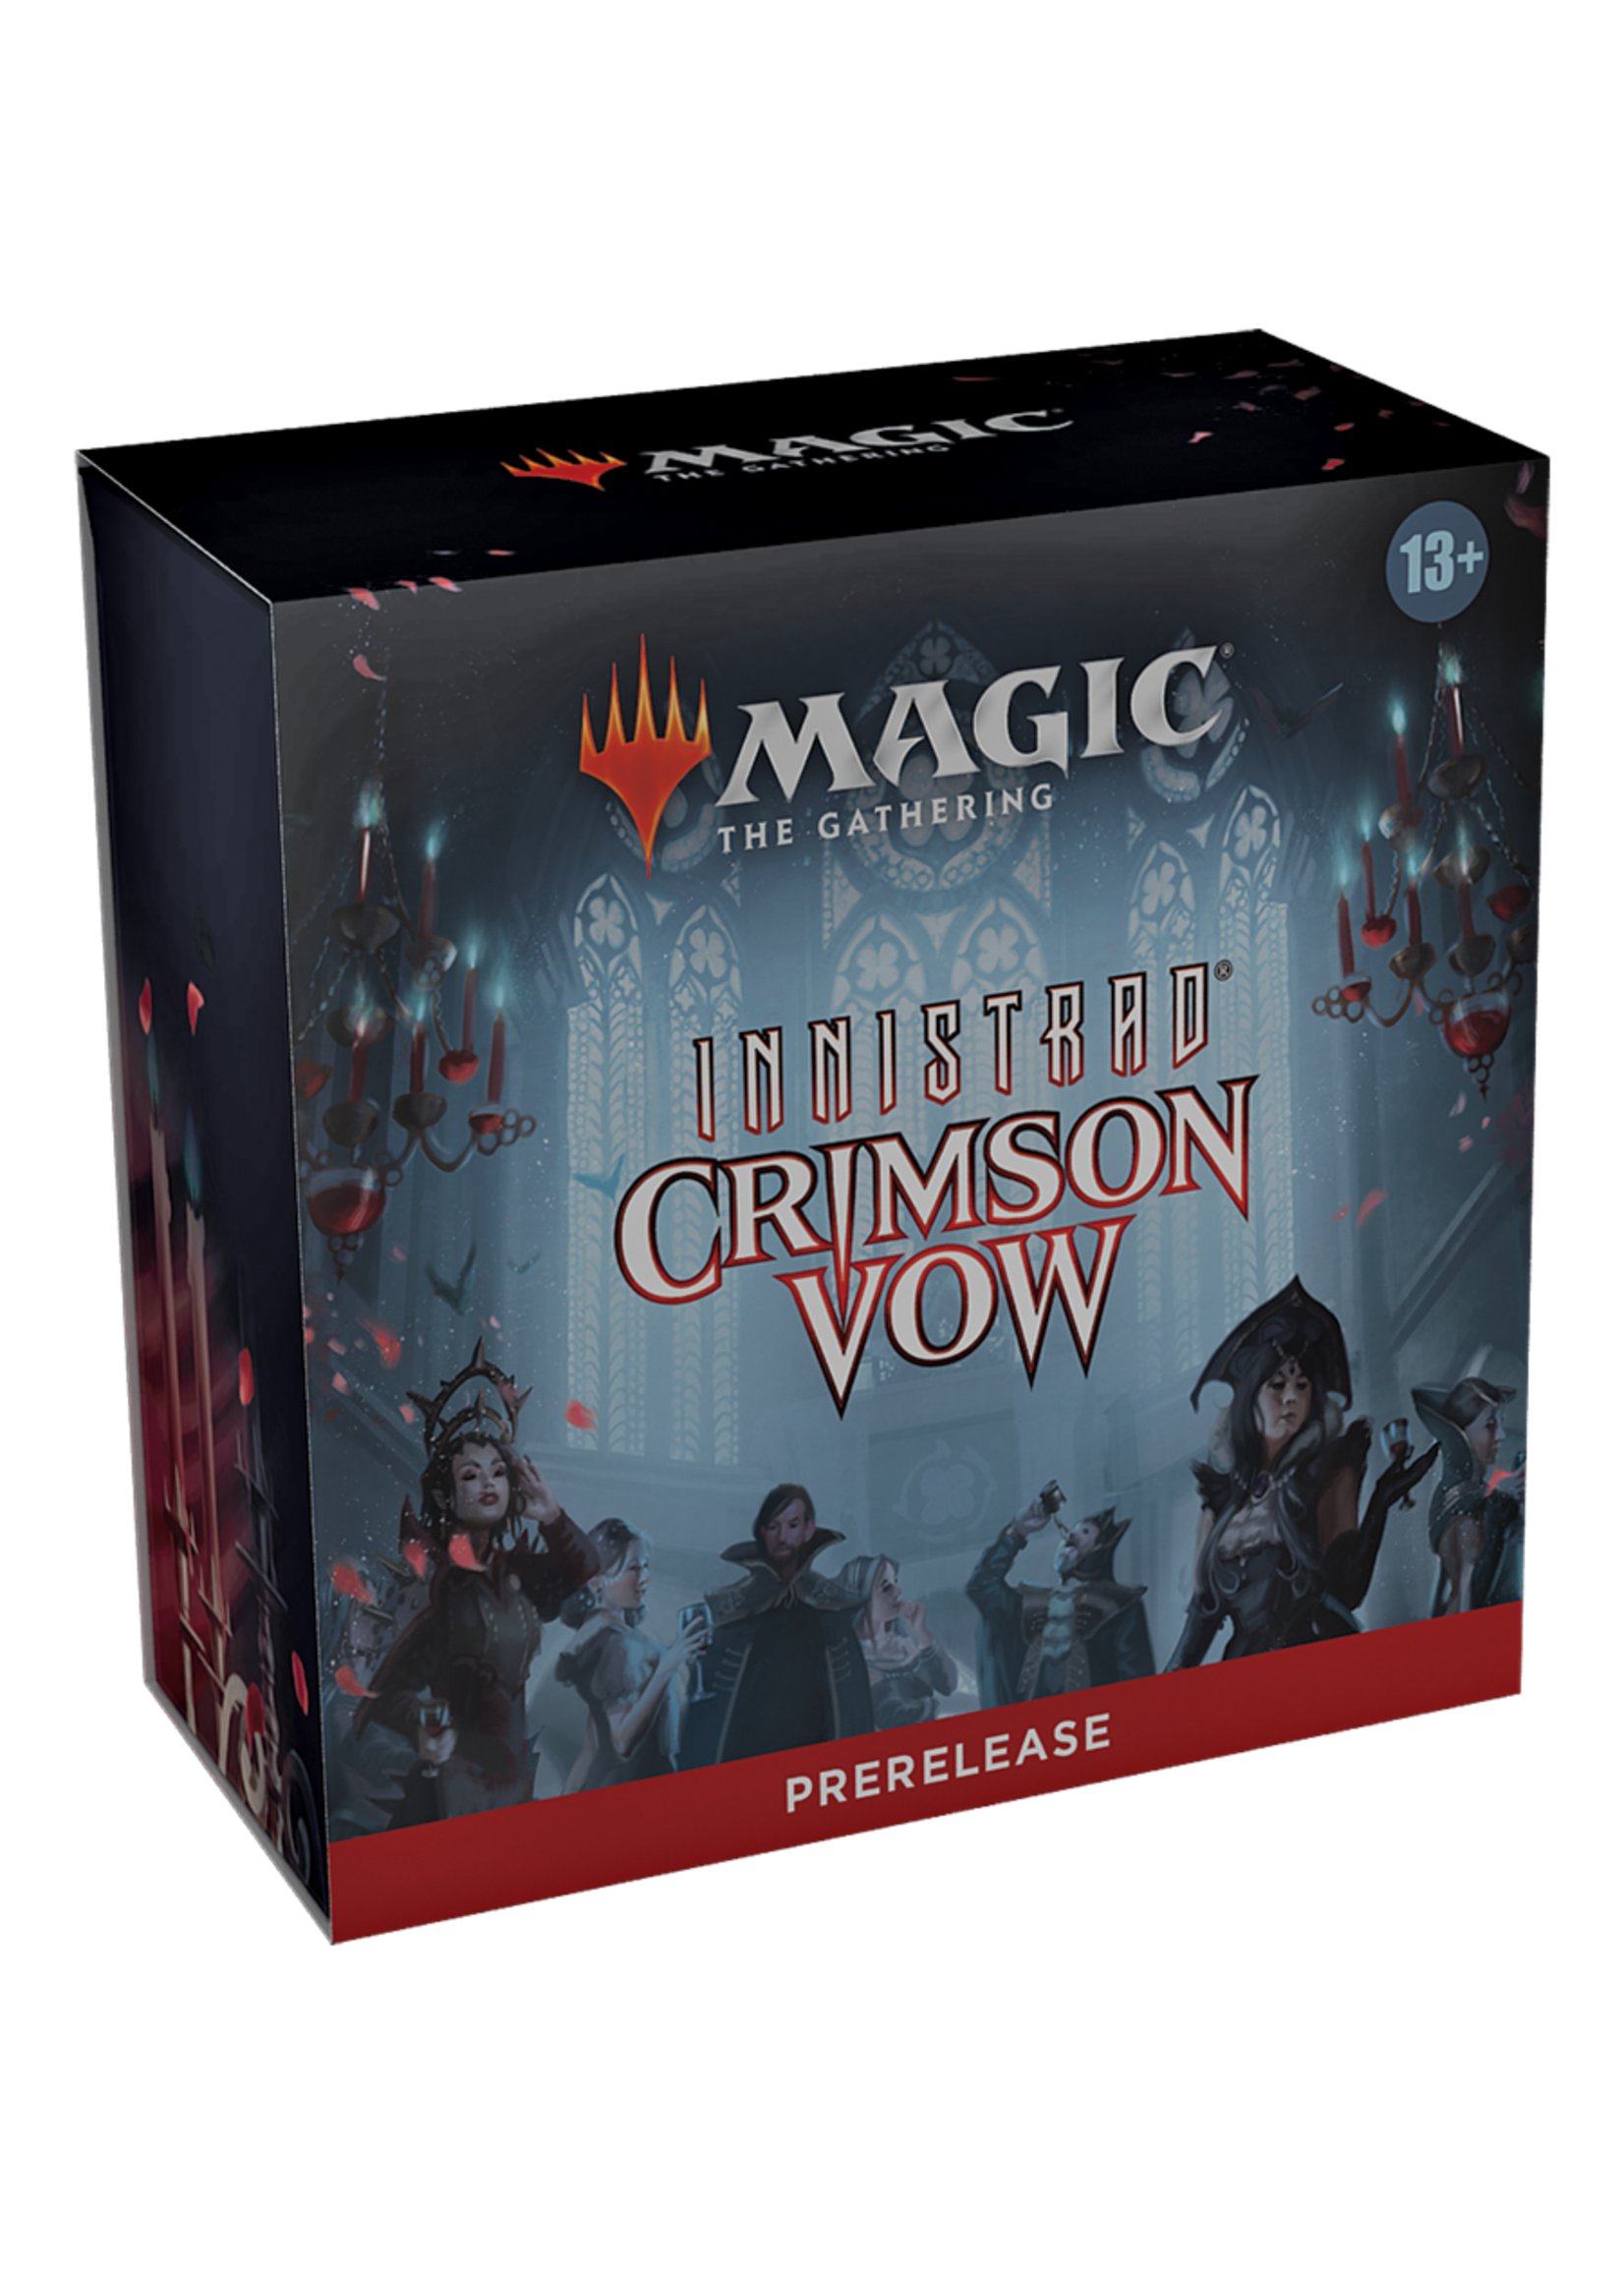 Magic: The Gathering Innistrad Crimson Vow prerelease kit